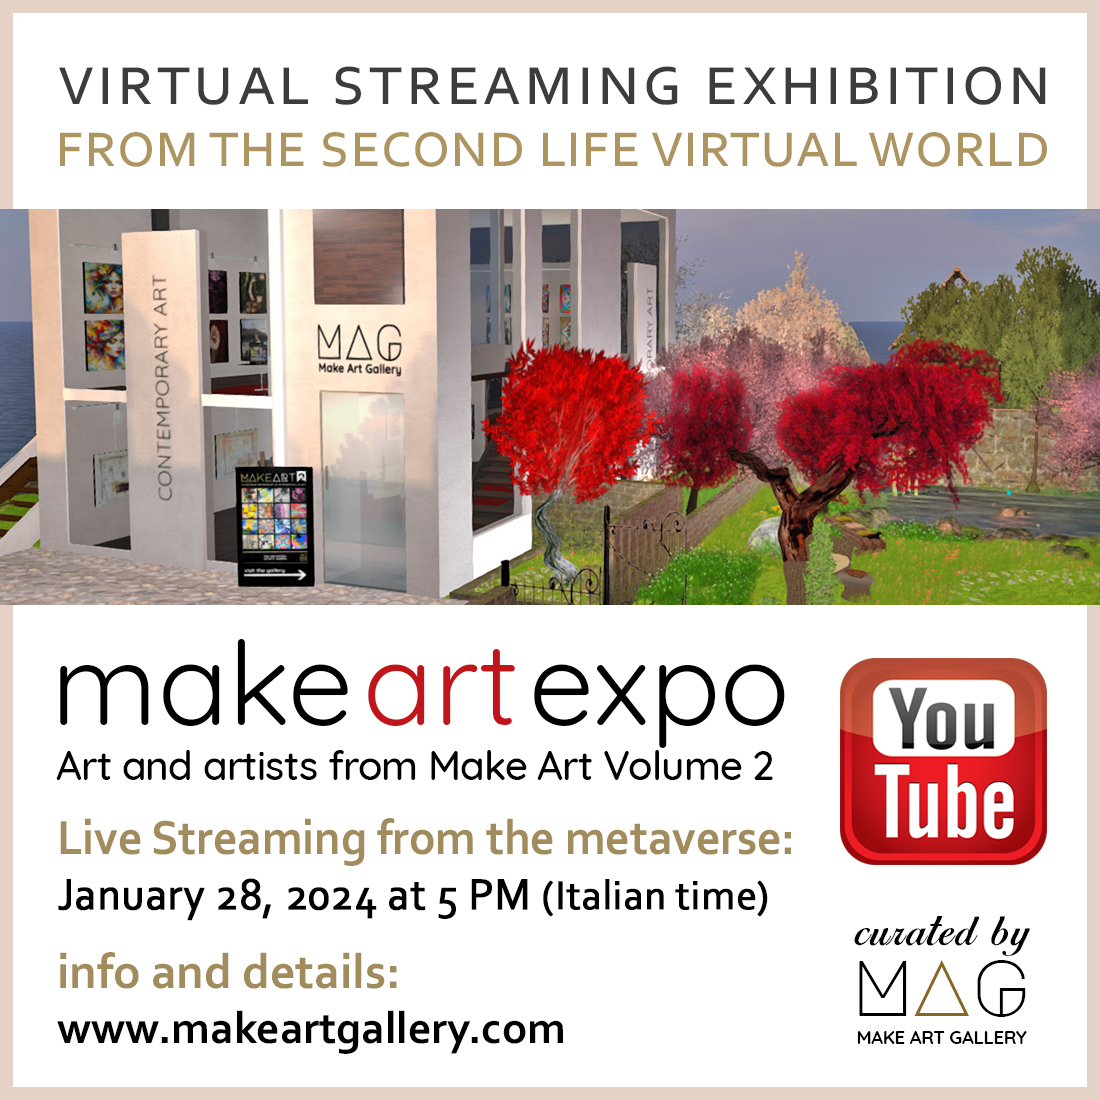 Mostra virtuale collettiva | in streaming dal Metaverso - Titolo: Make Art ExpoMostra virtuale collettiva | in streaming dal Metaverso - Titolo: Make Art Expo